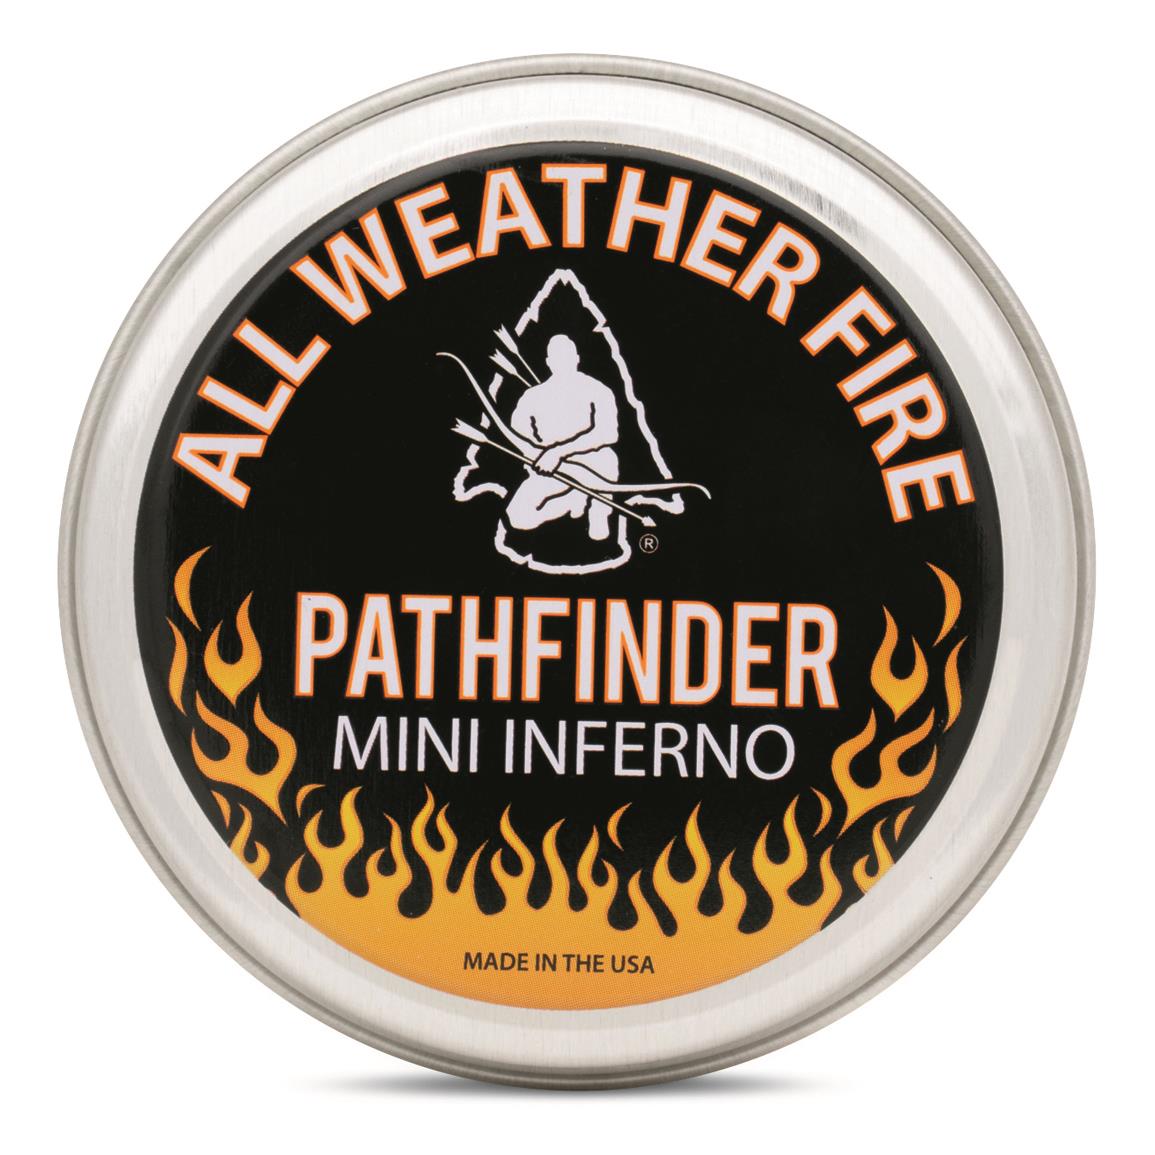 Pathfinder Mini Inferno